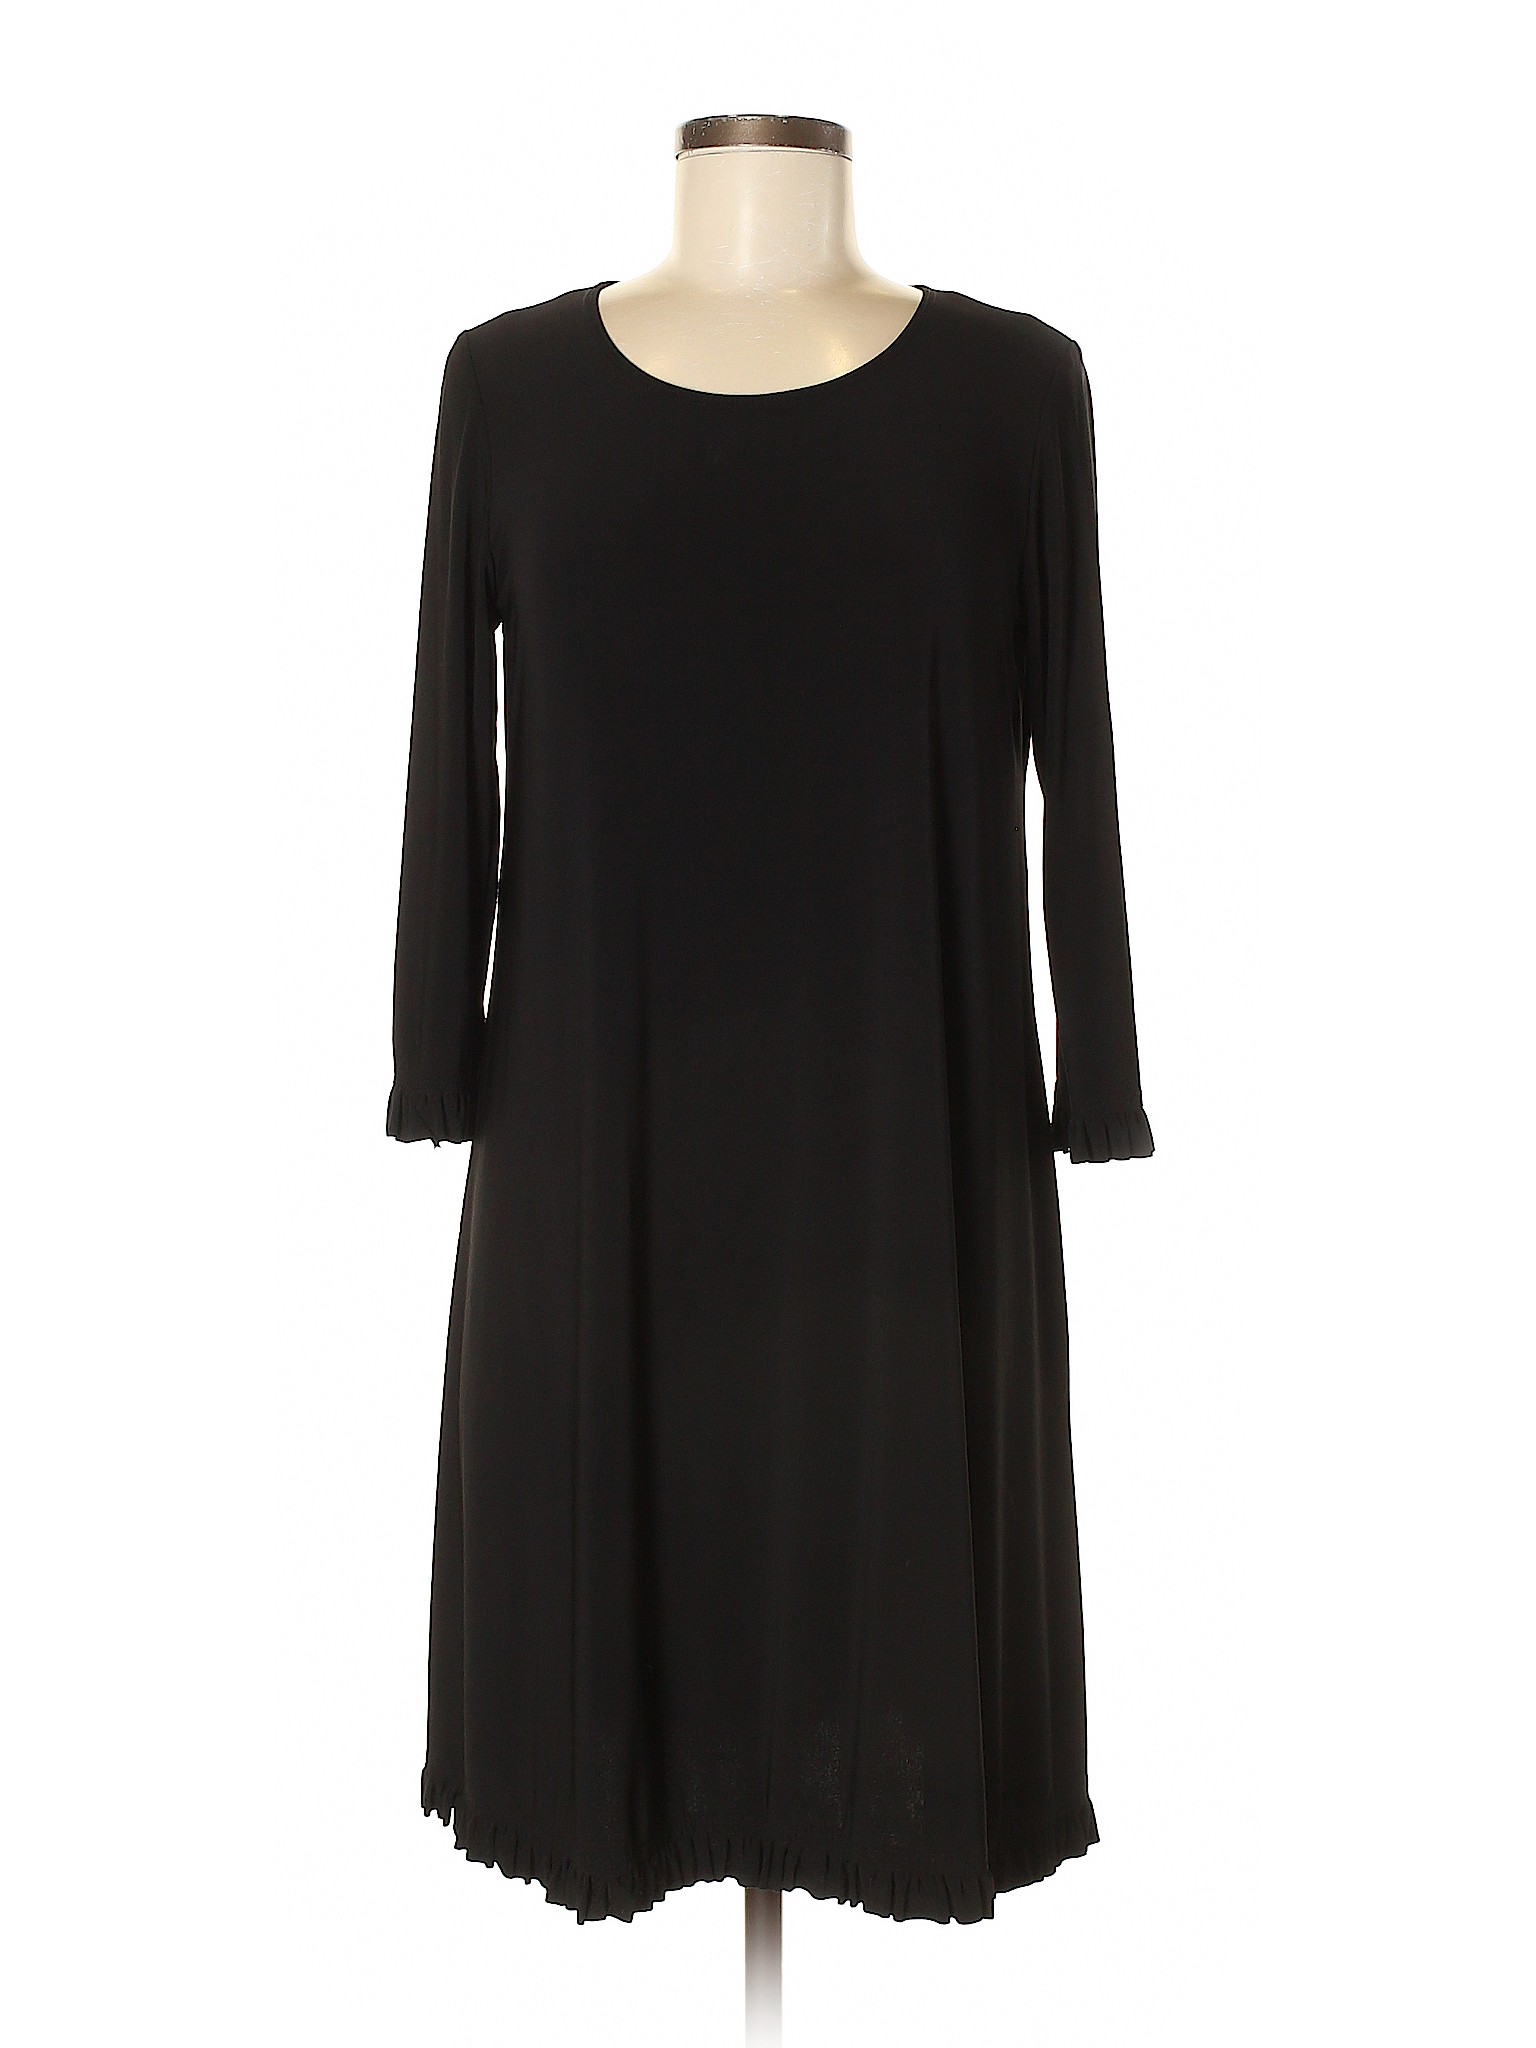 Nik And Nash Women Black Casual Dress Med | eBay